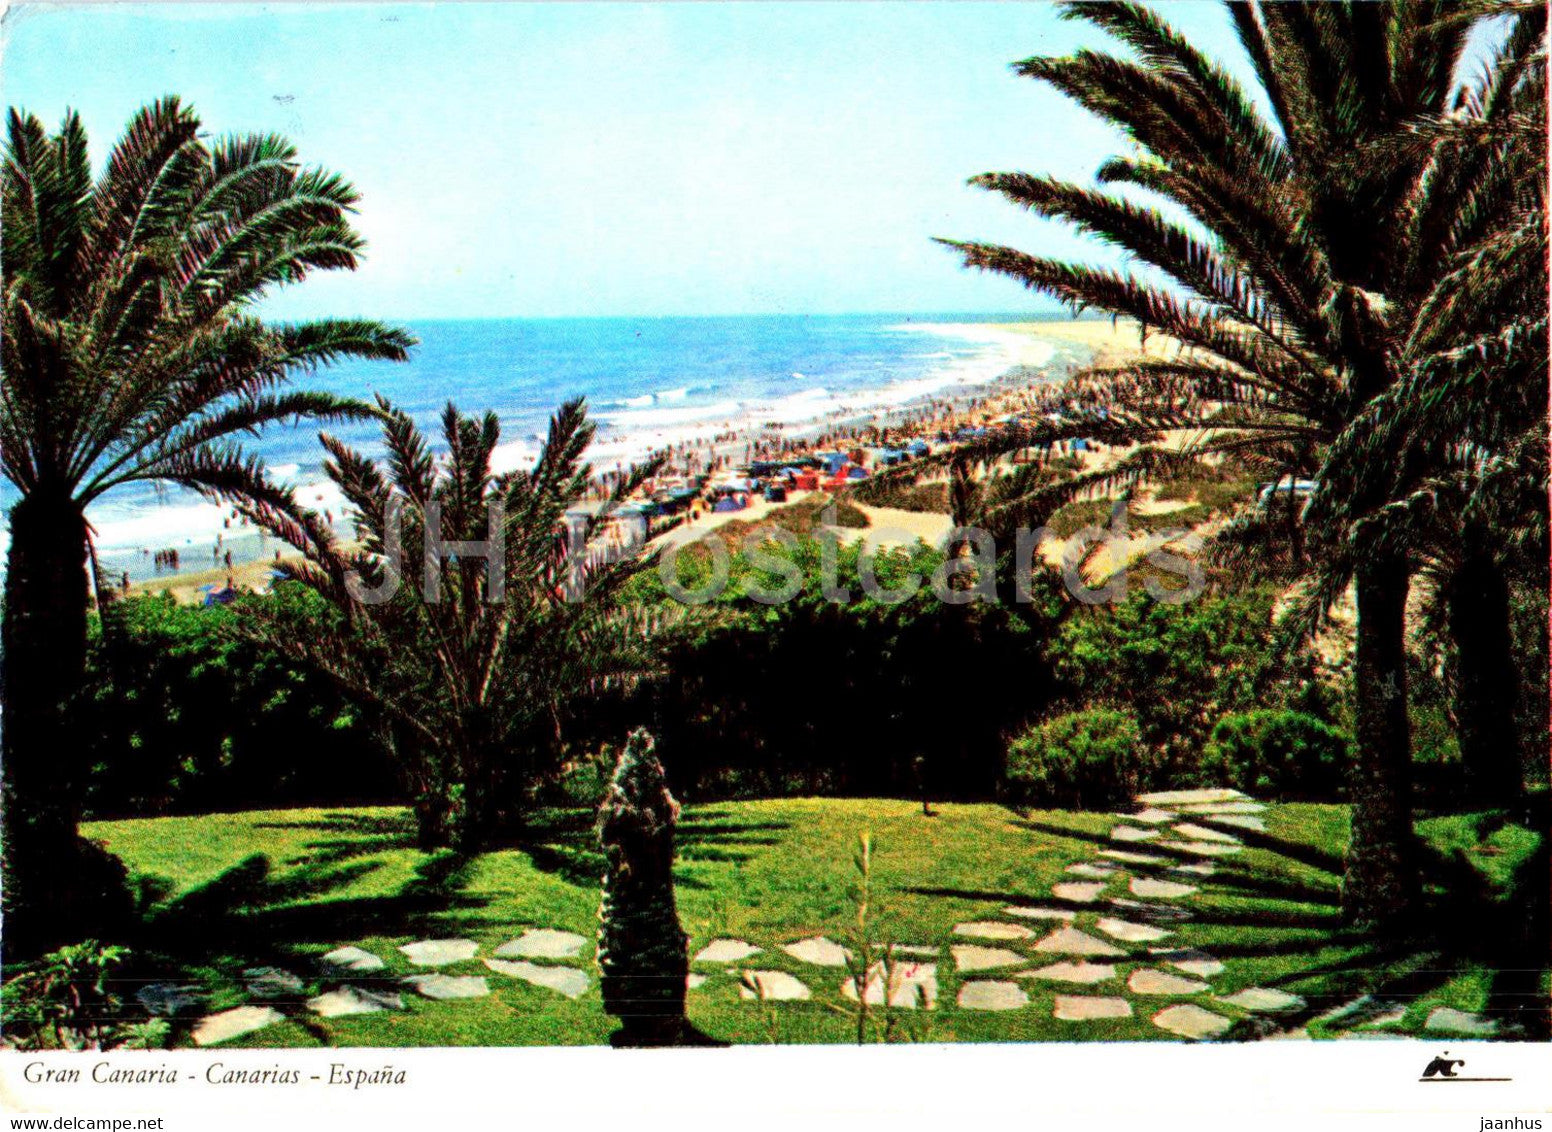 Gran Canaria - Playa del Ingles - The Ingles beach - Spain - used - JH Postcards